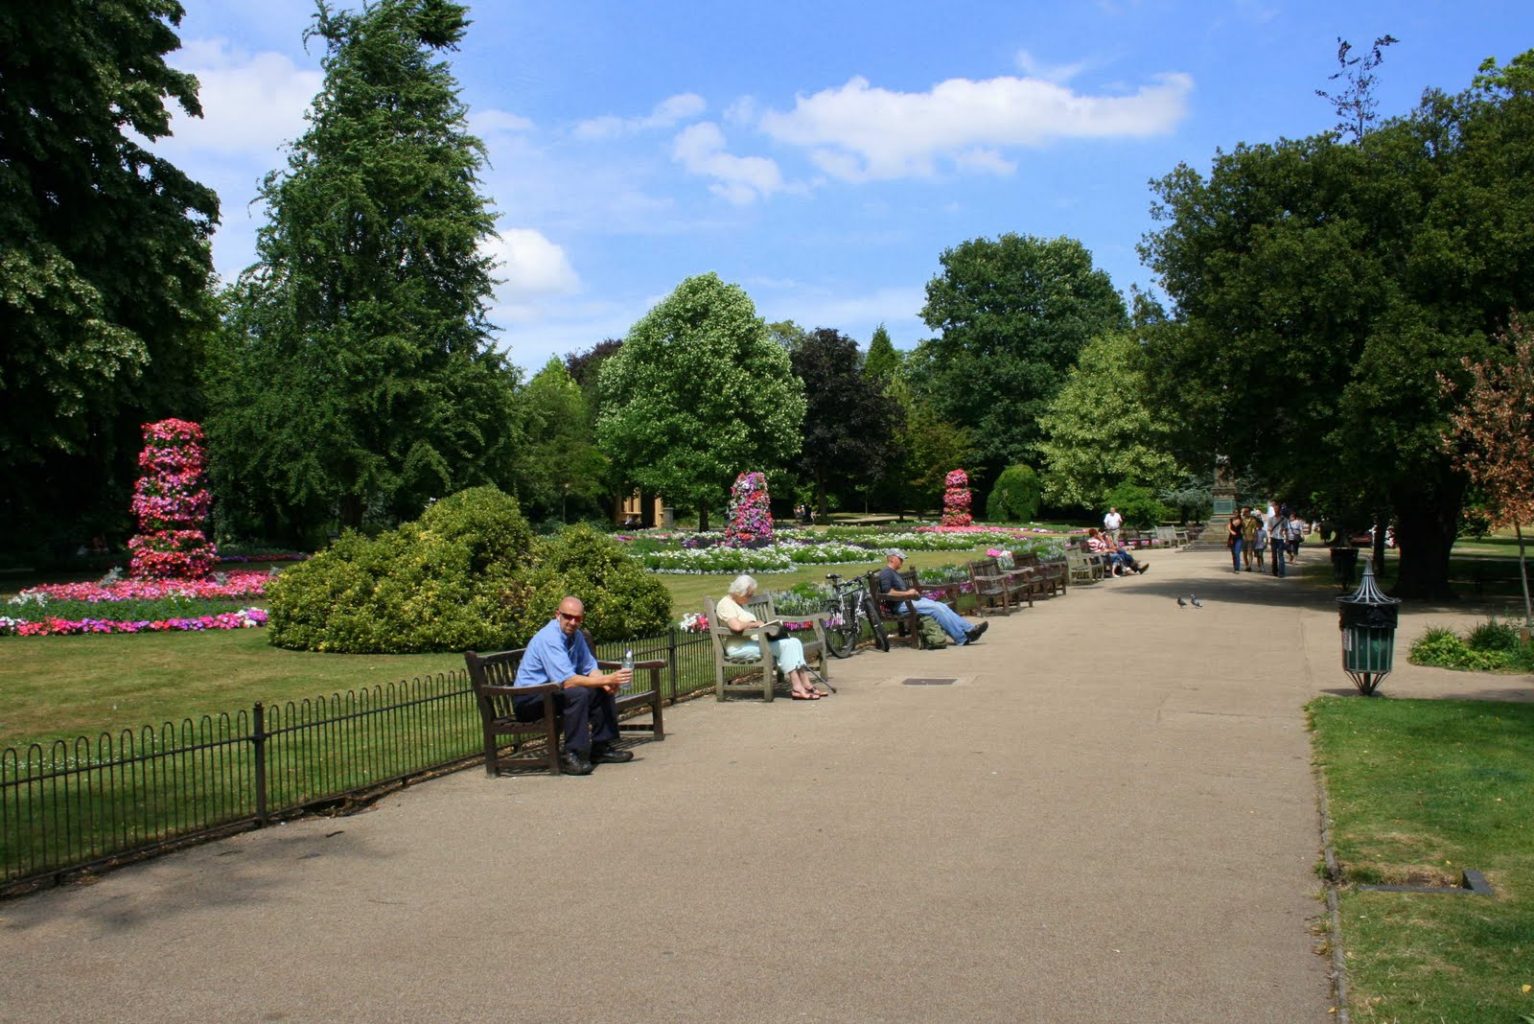 Jephson Gardens is an ideal place for a jog. Photo: blogspot